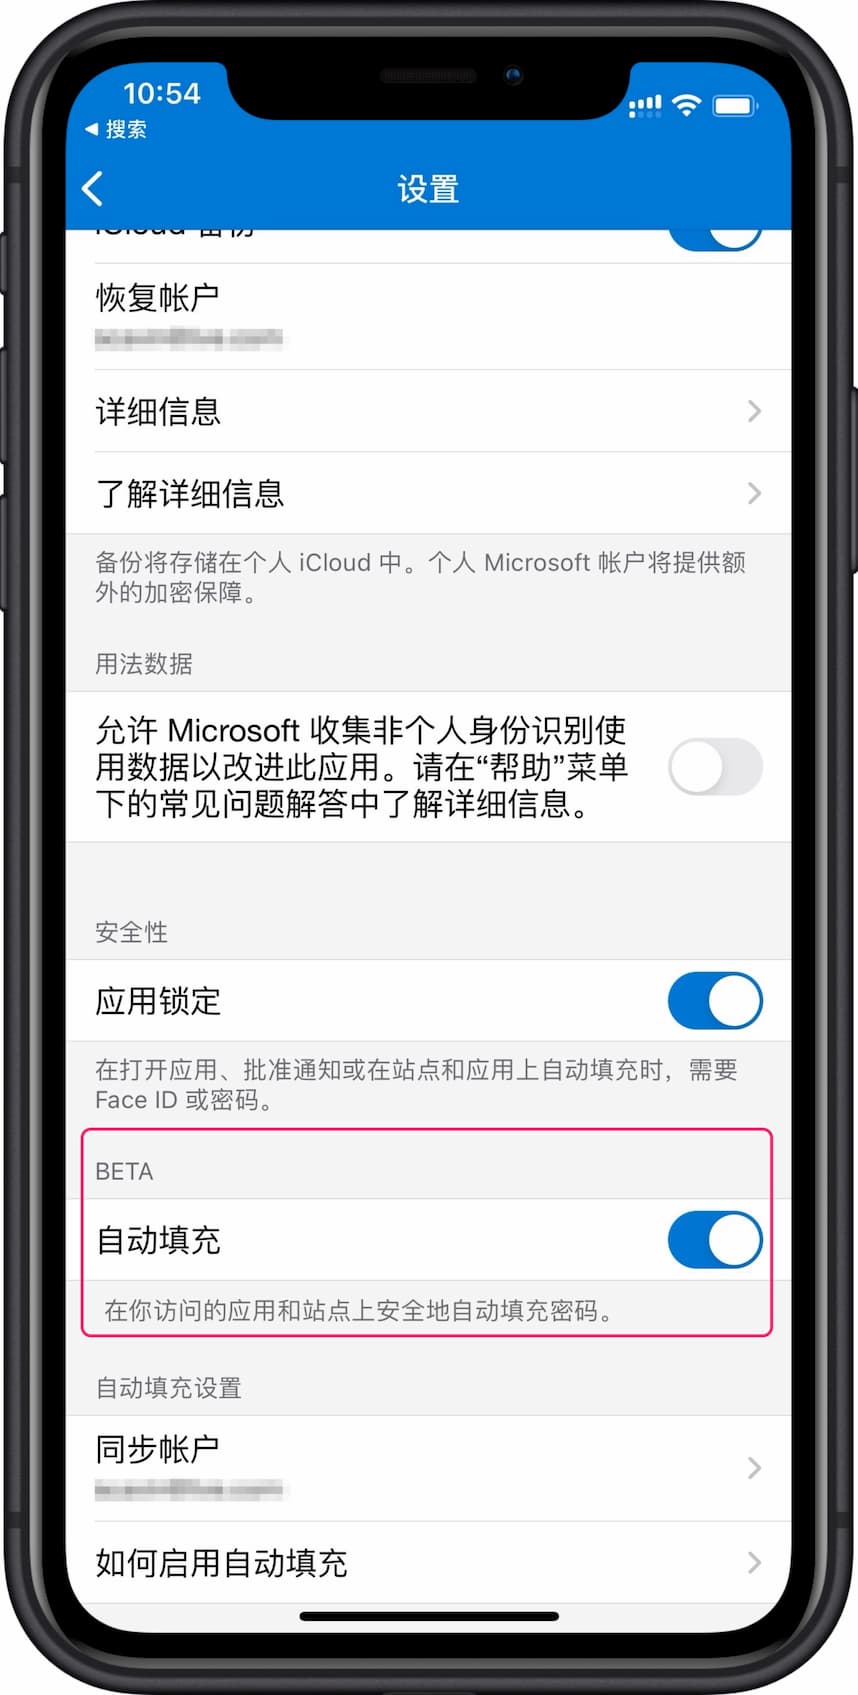 Microsoft Authenticator 密码管理器 - 从 Edge 同步密码，支持在 iPhone、Android 设备及 Chrome 中自动填充密码 1